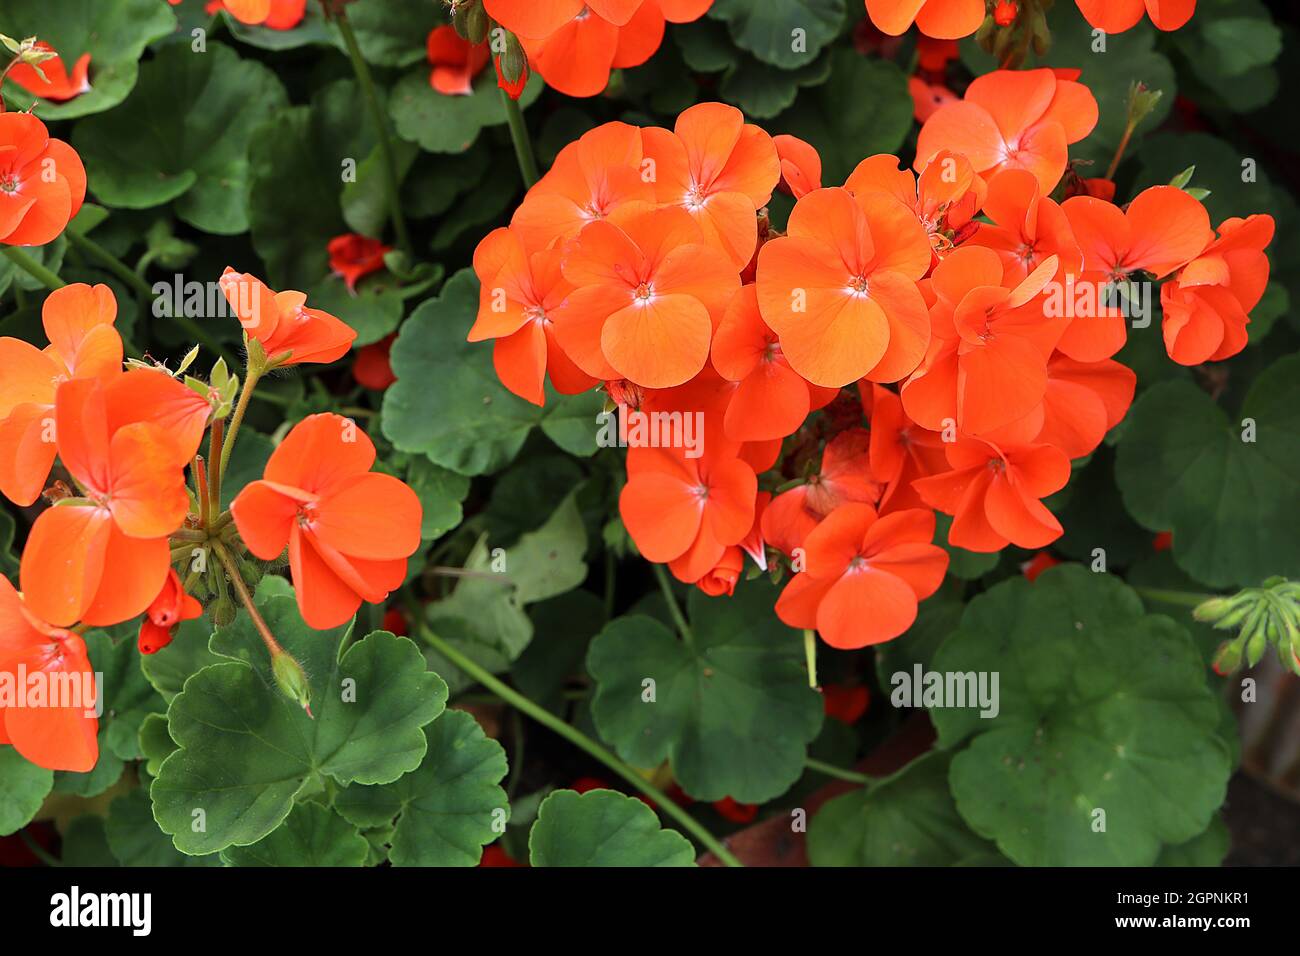 Pelargonium x hortorum ‘Horizon Orange’ Geranium Horizon Orange – deep orange flowers and round palmately lobed leaves with scalloped margins,  UK Stock Photo